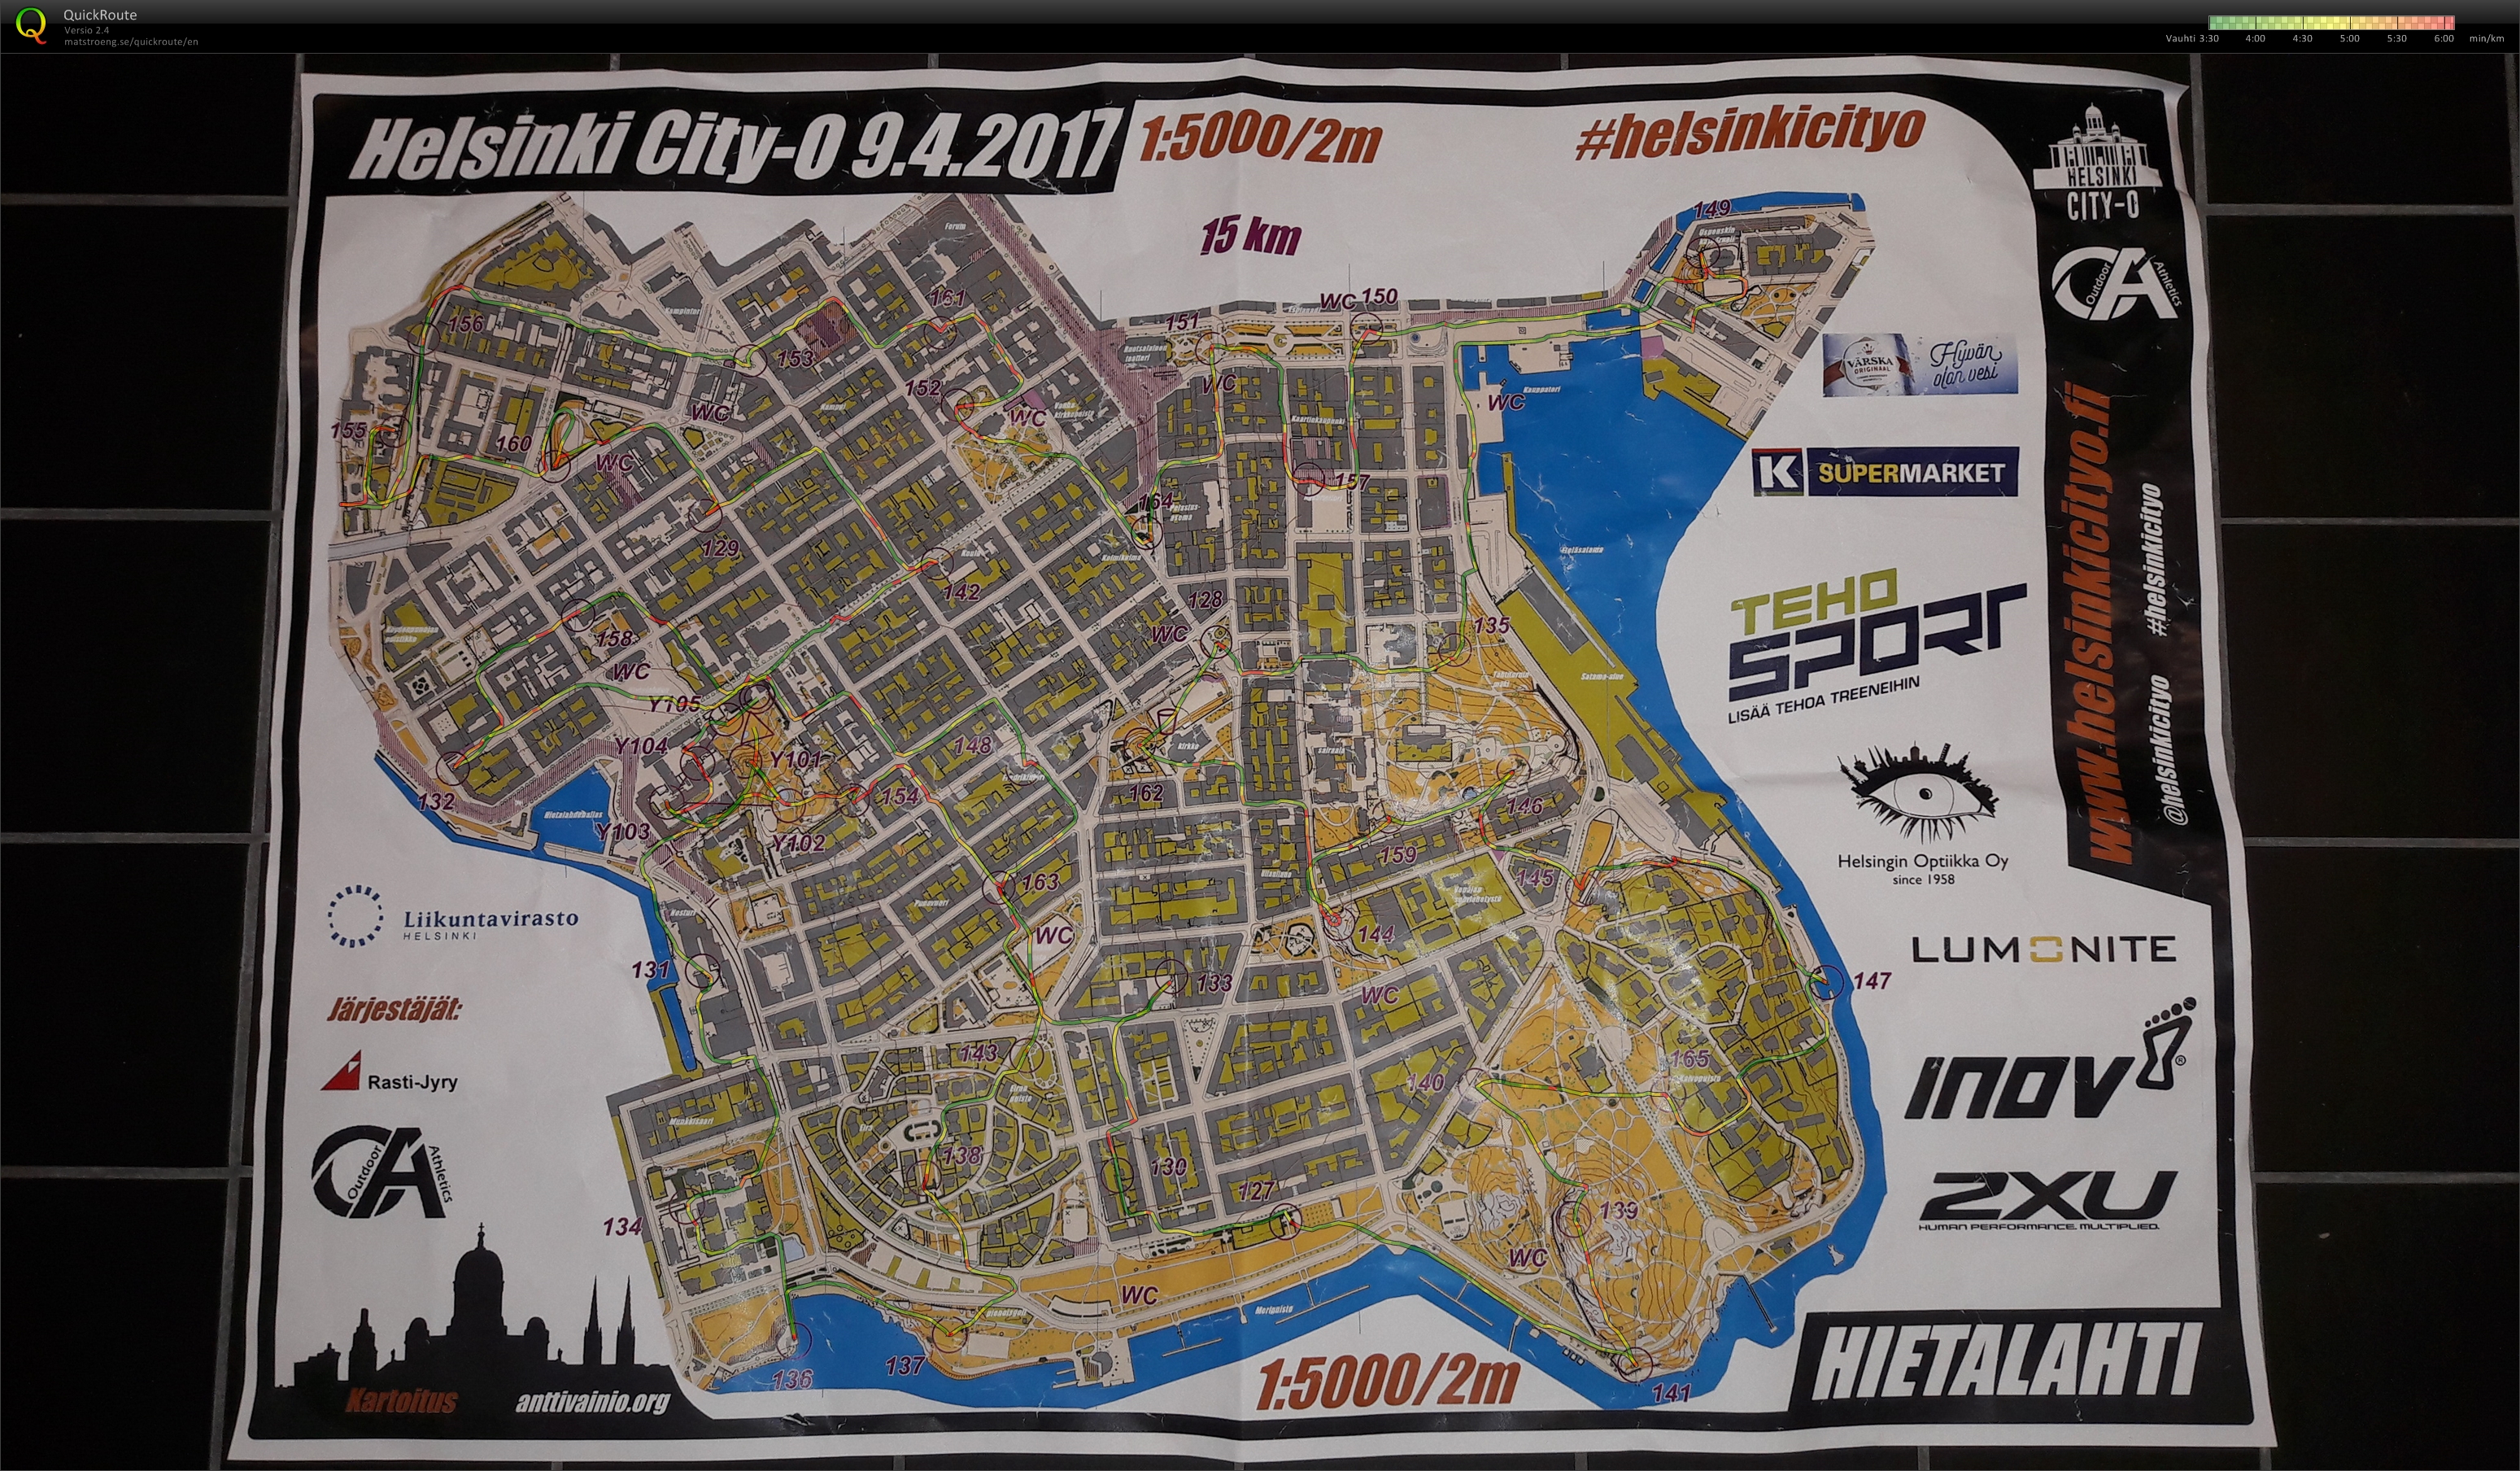 Helsinki city-o (09-04-2017)